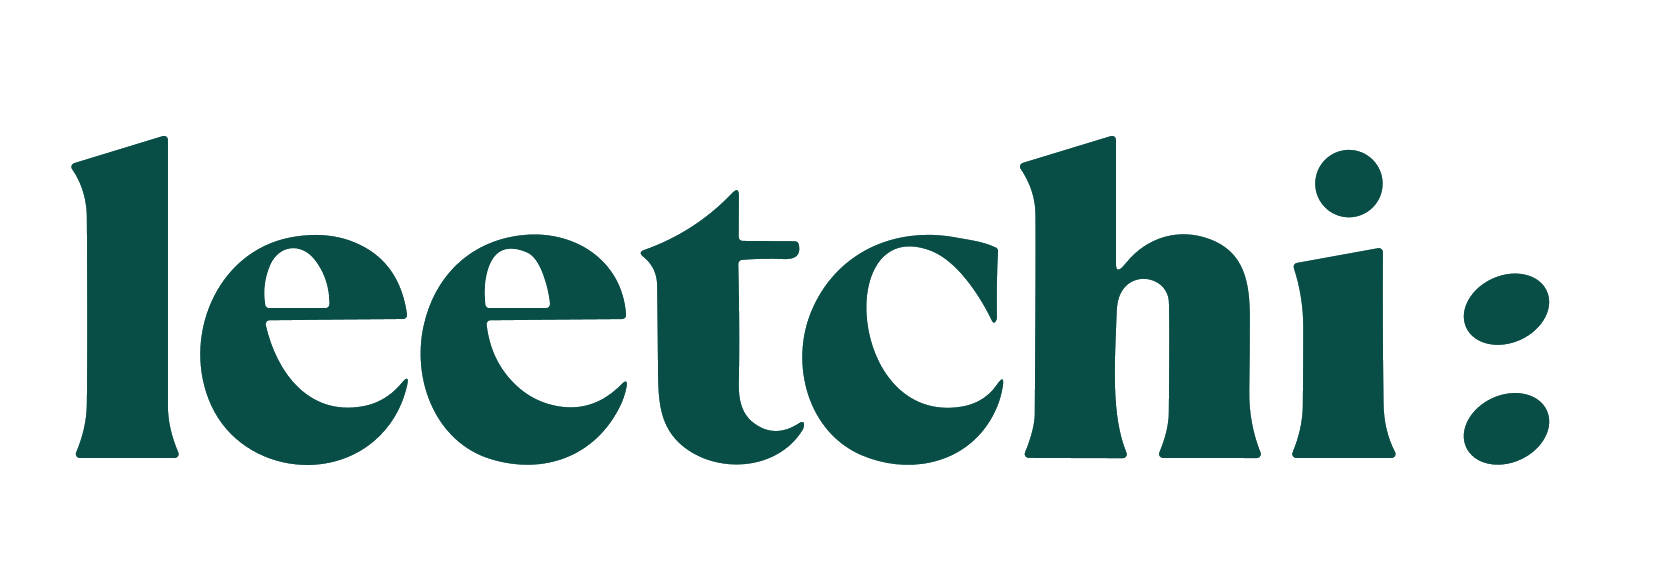 Leetchi logo